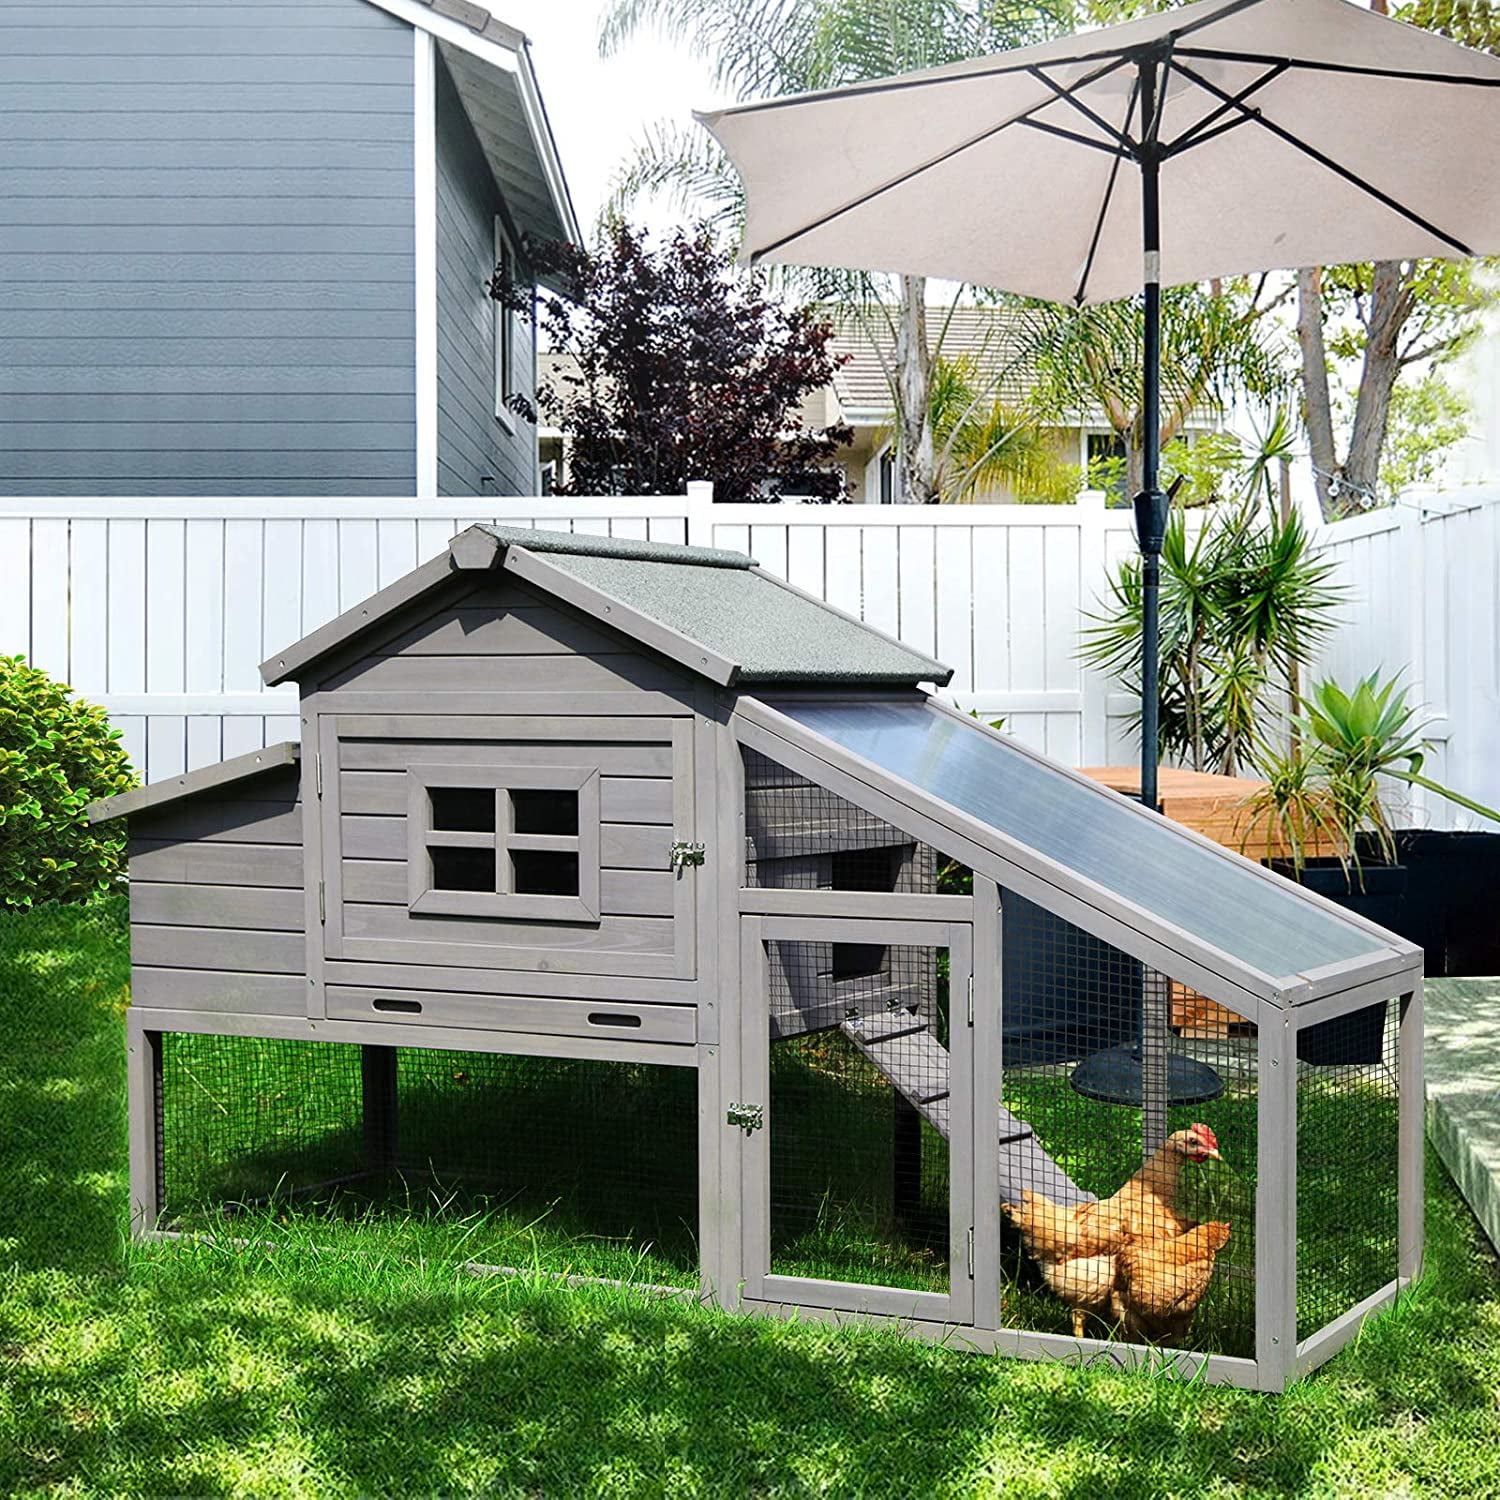 1/12 Dollhouse Miniature Chicken Coop Hen House for Farm Garden Yard Decor 